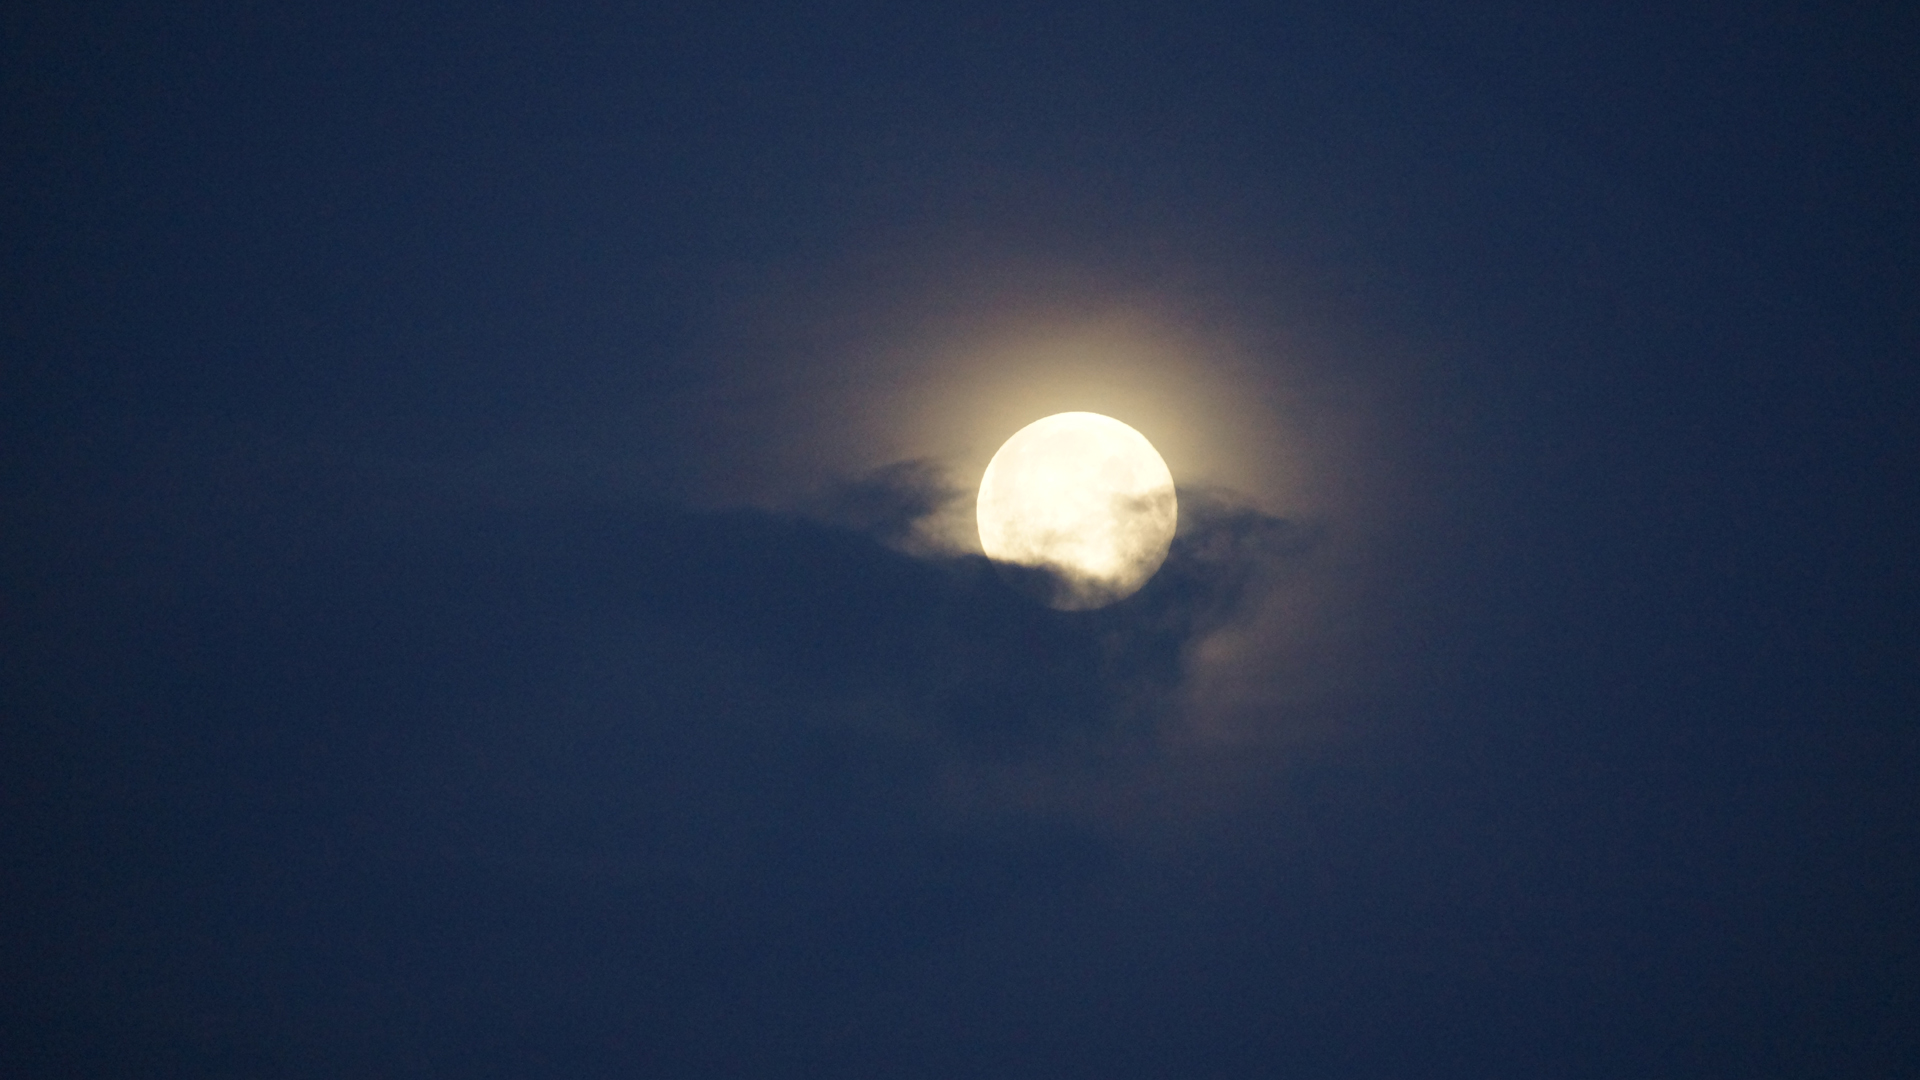 Fotostrecke Mond, Abbildung 17: Supermond vom 20. Februar 2019